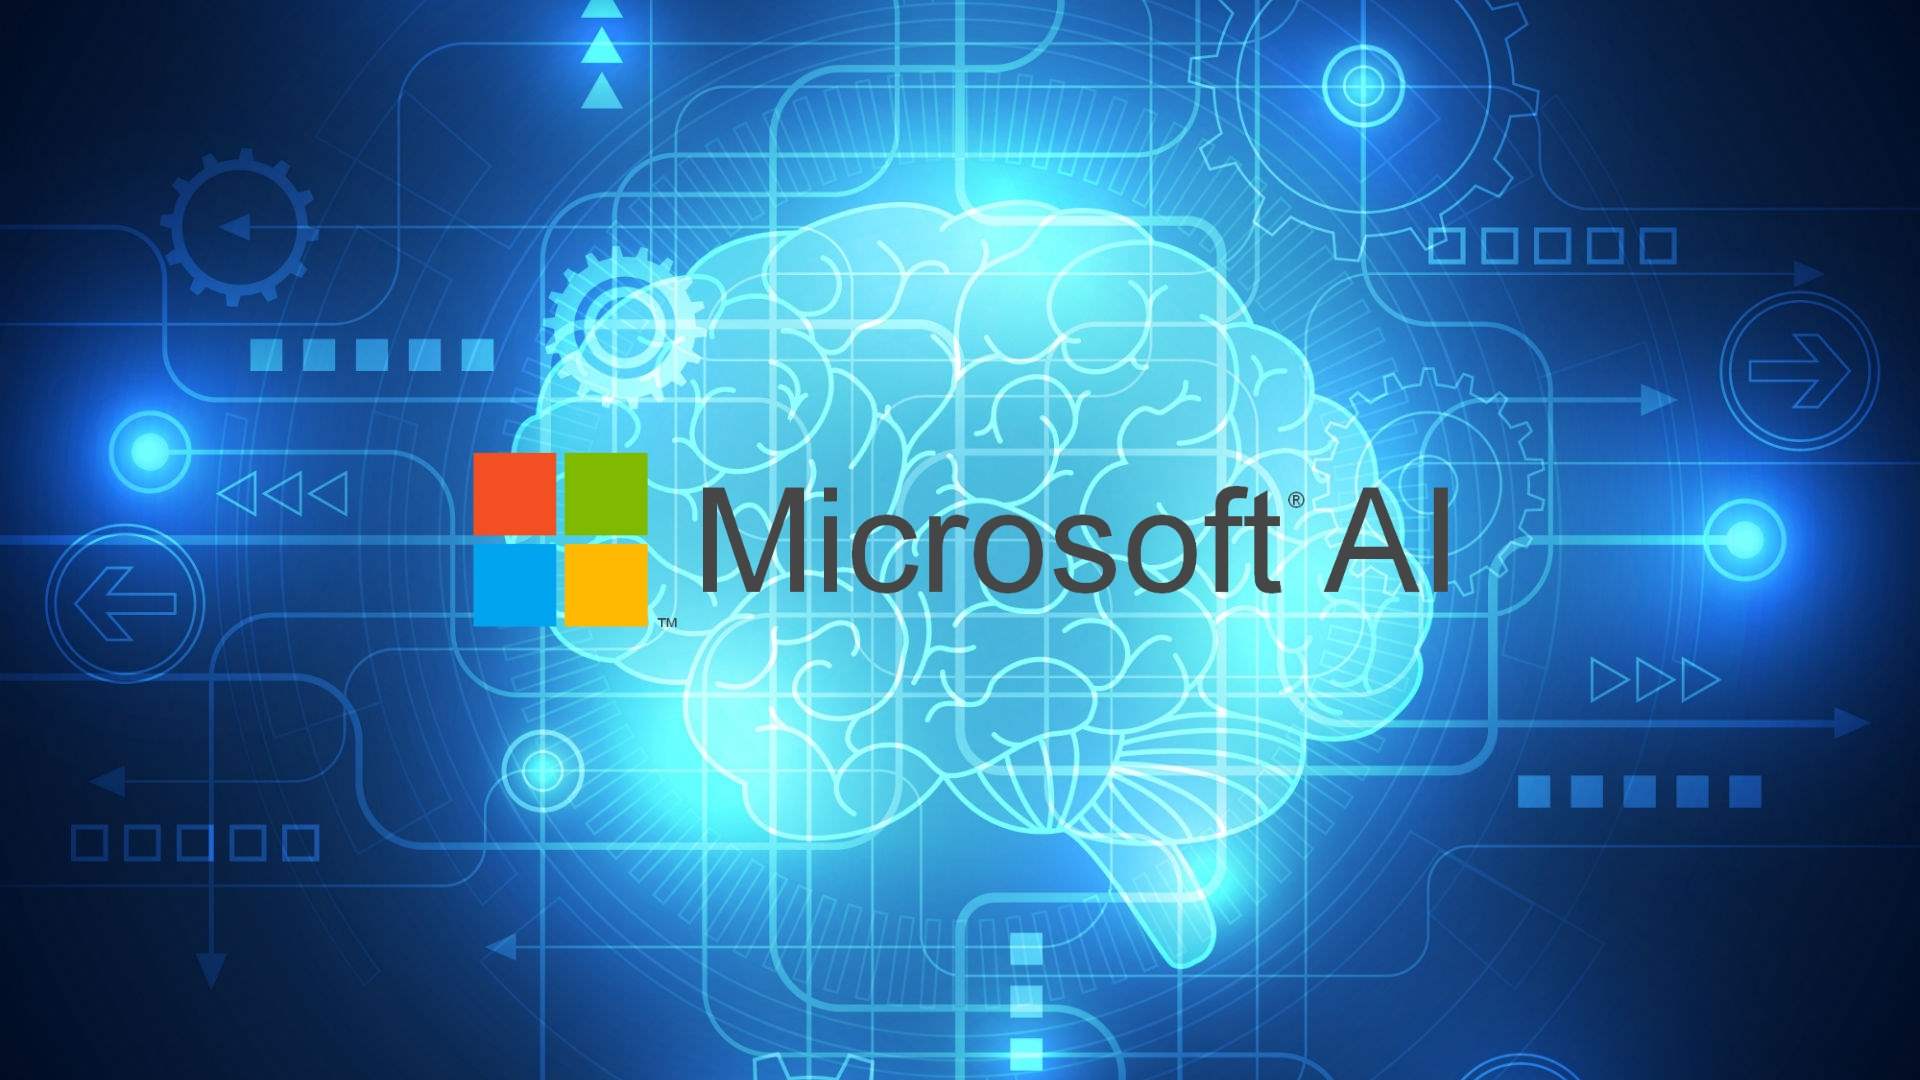 Microsoft welcomes Sam Altman to lead new in-house AI team